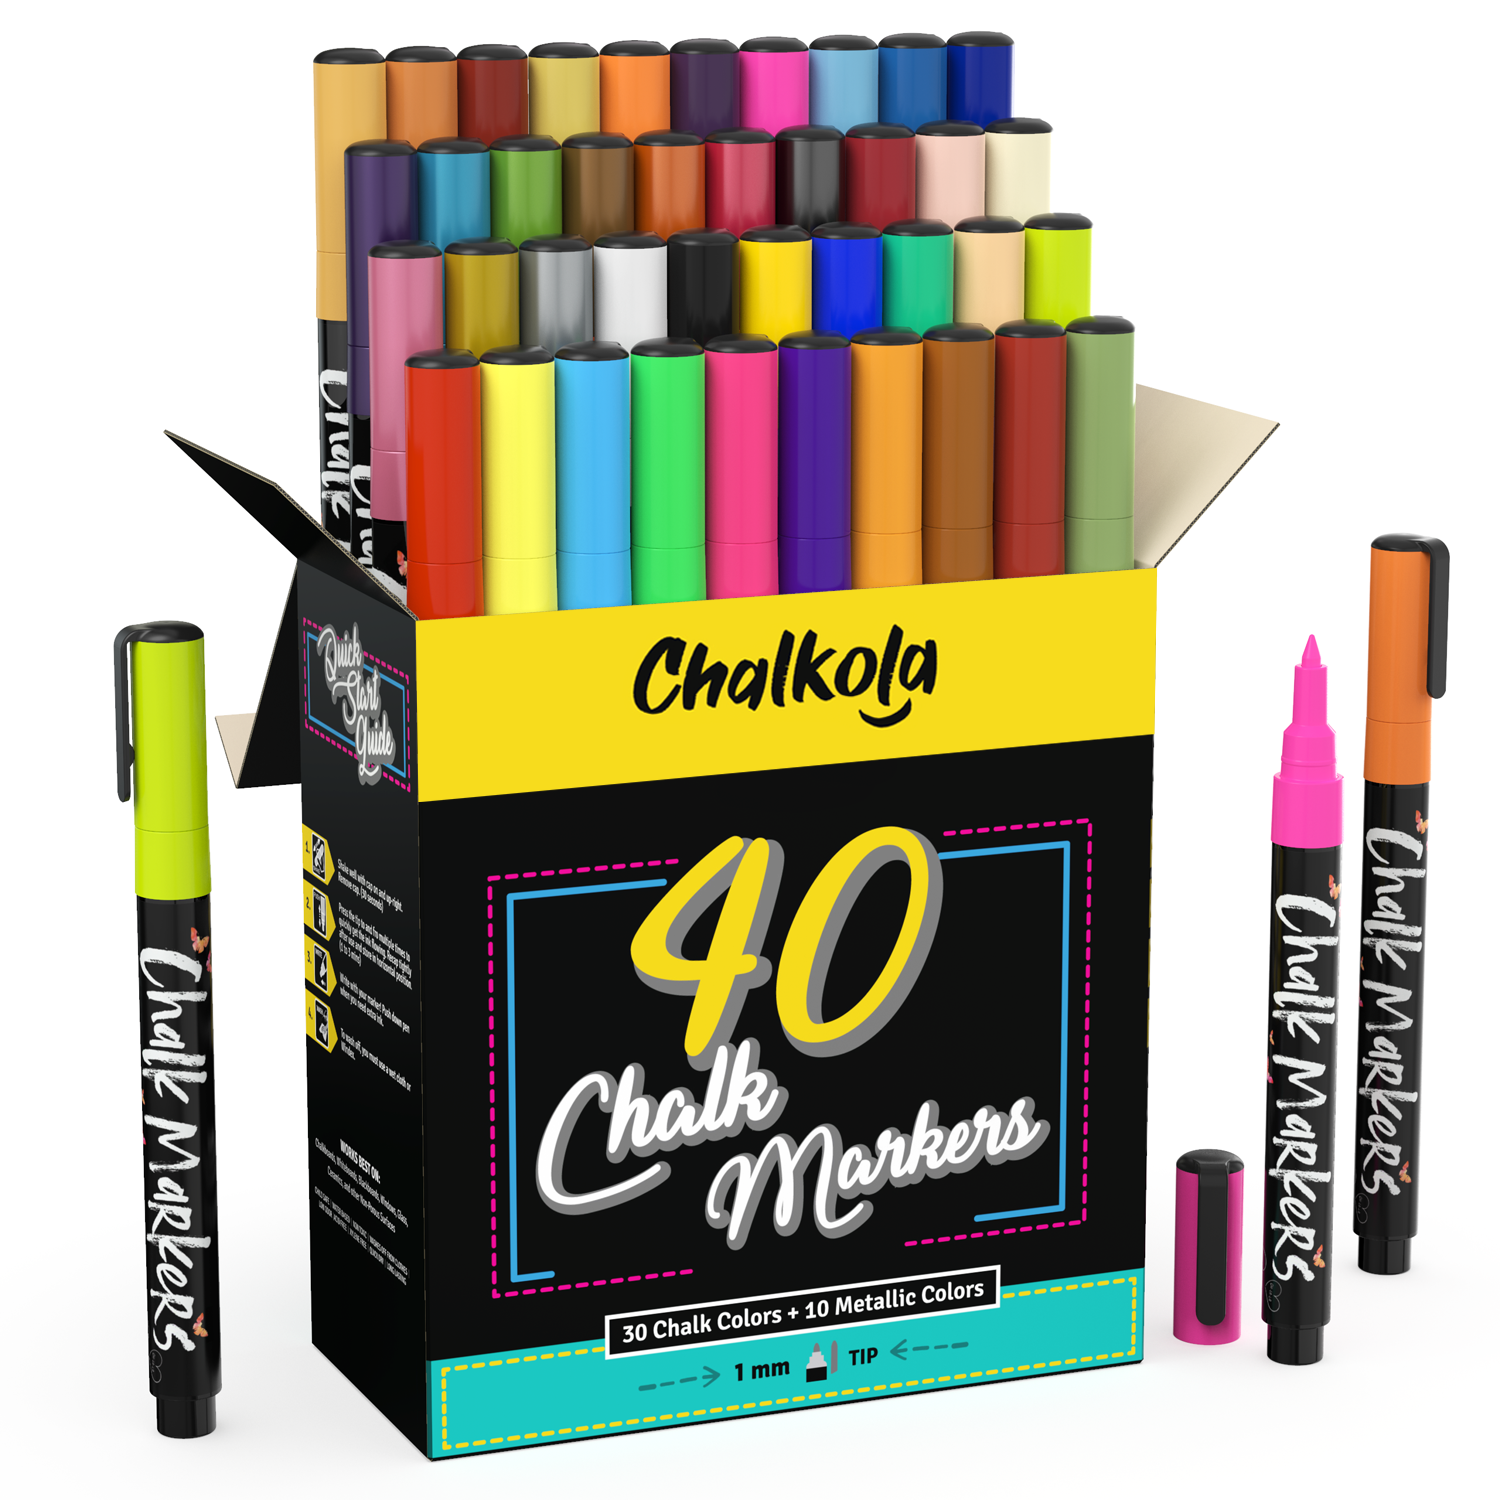 MMFB Arts & Crafts Premium Liquid Chalk Markers Medium Size (10